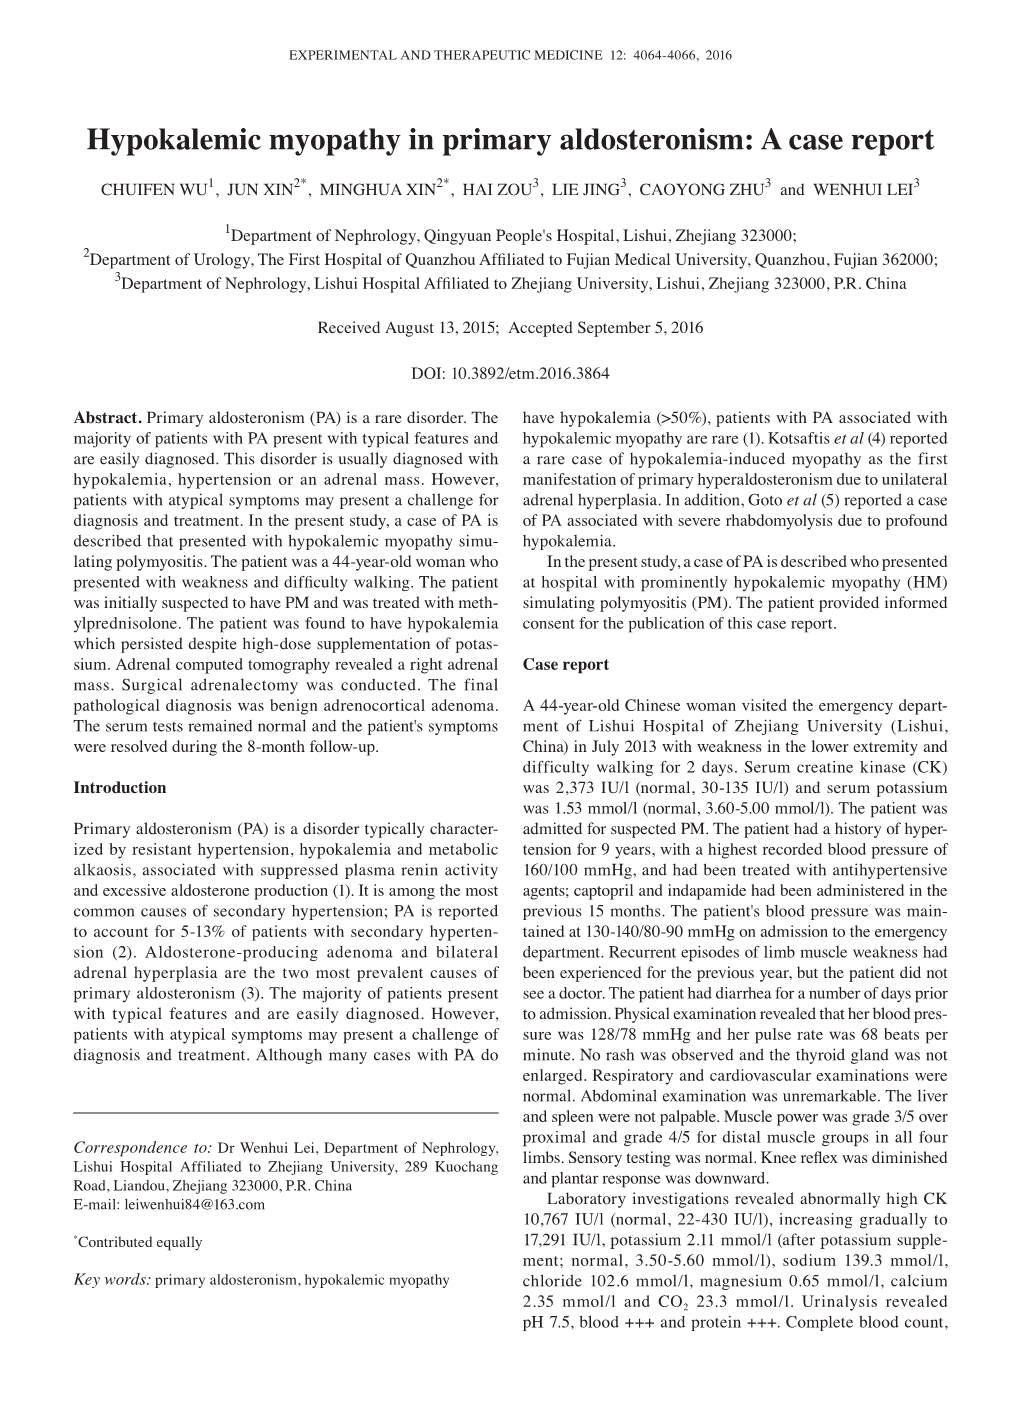 Hypokalemic Myopathy in Primary Aldosteronism: a Case Report